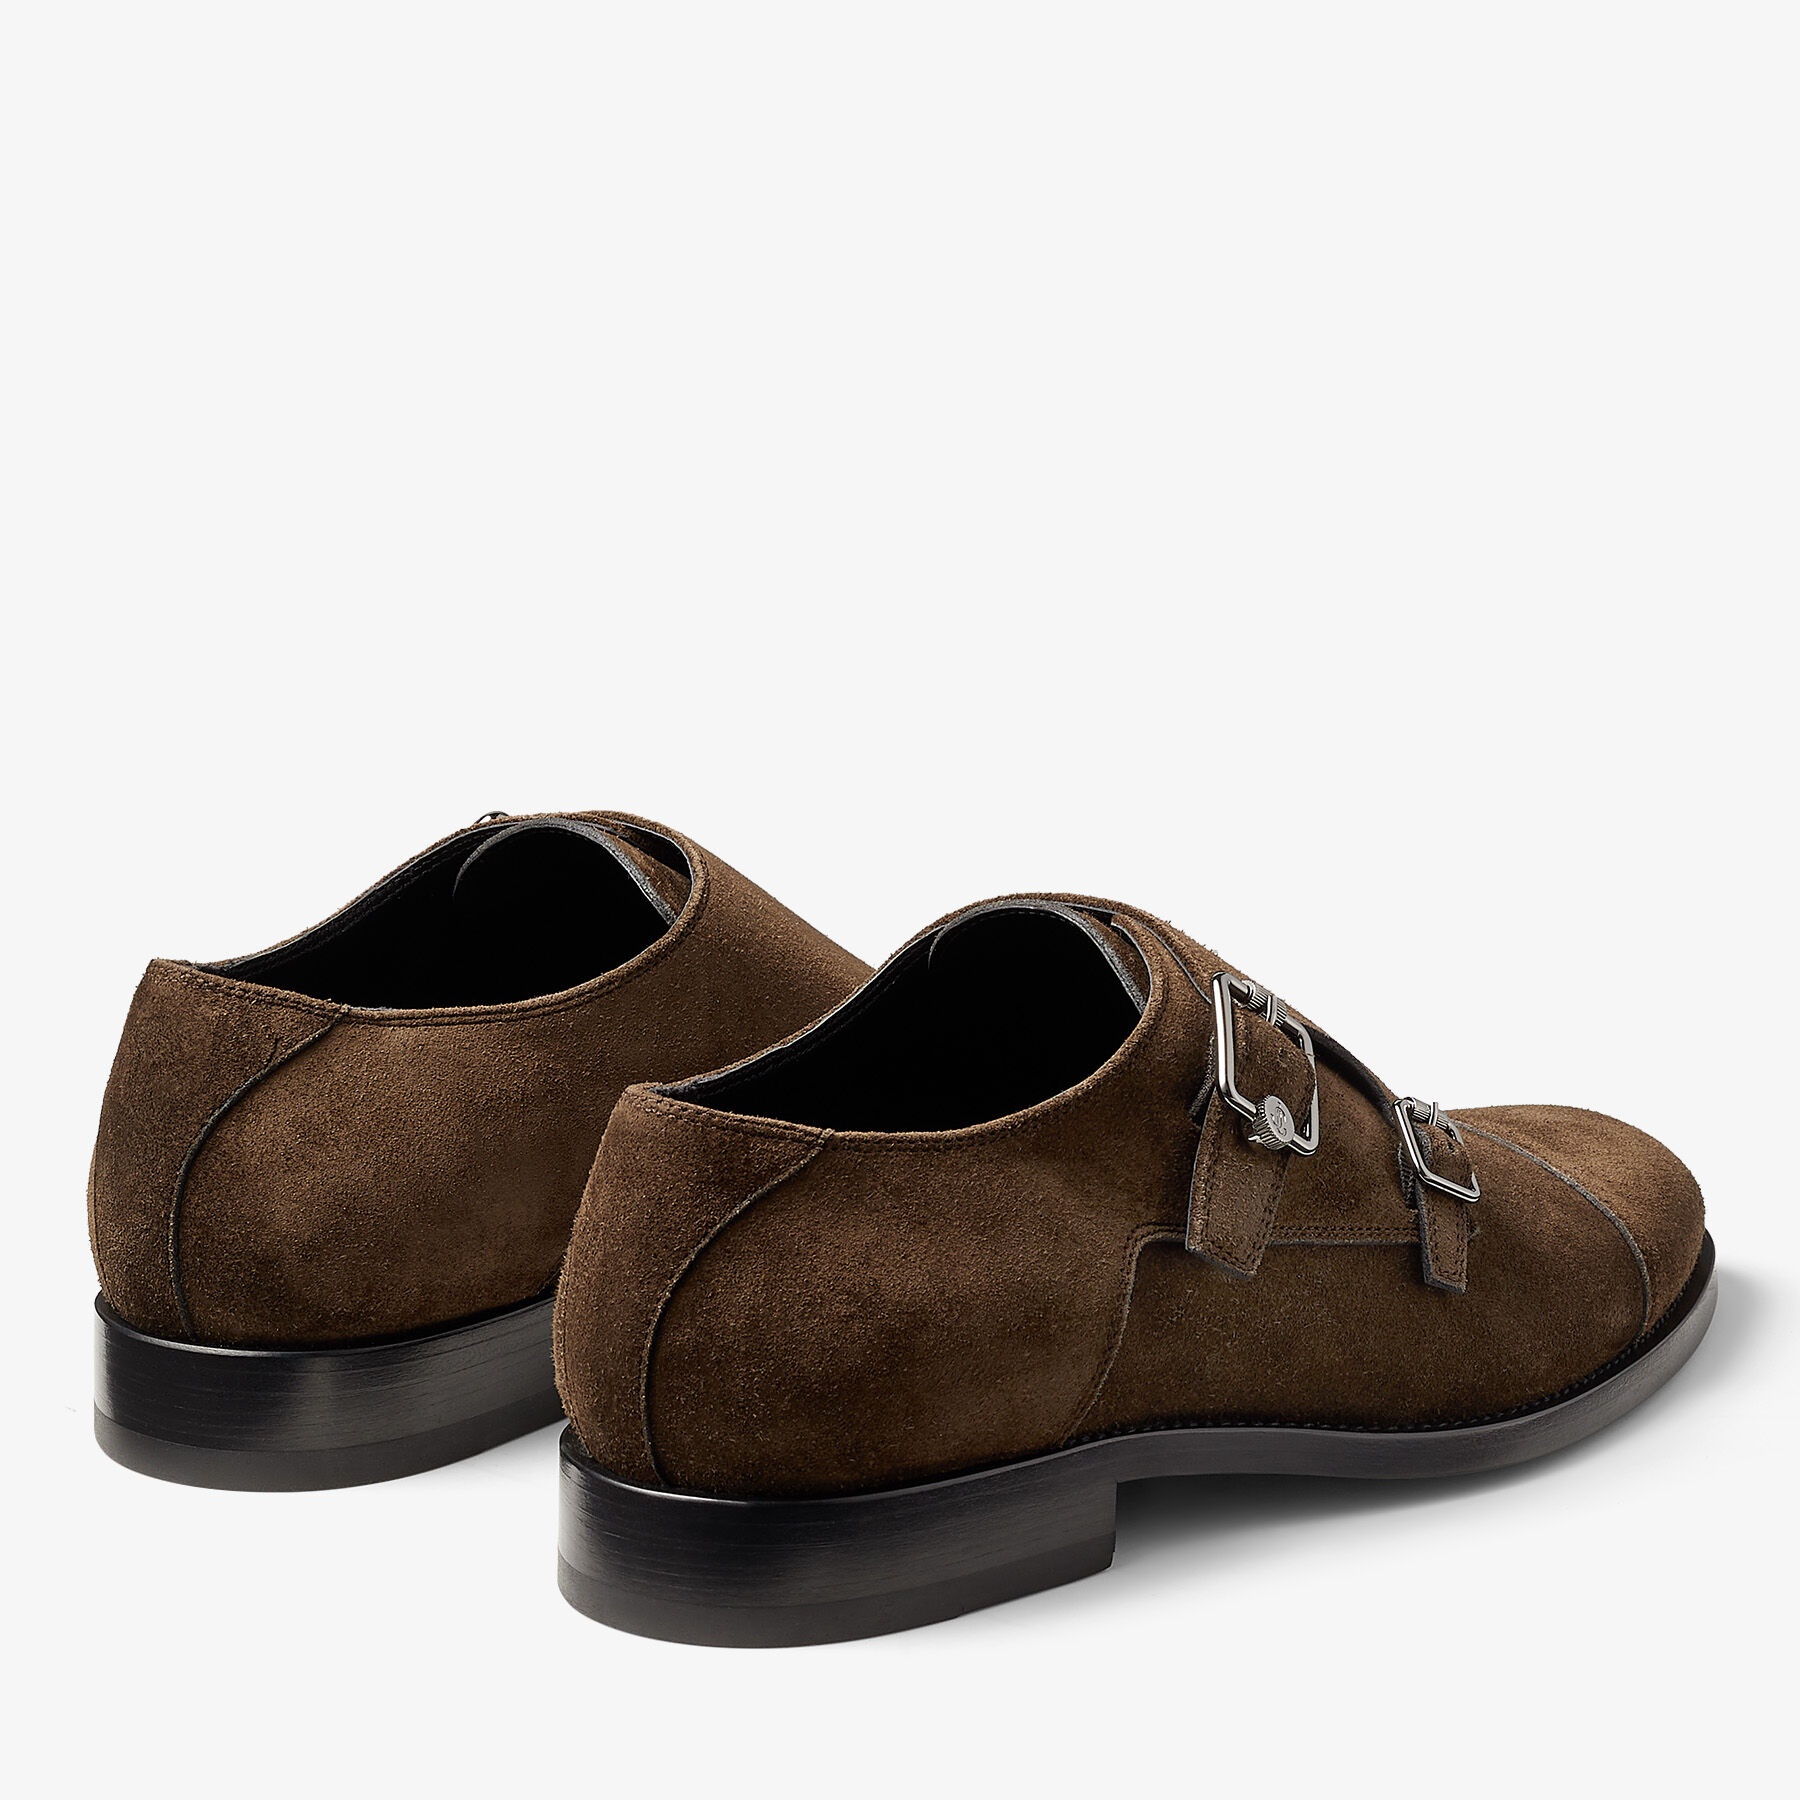 Finnion Monkstrap
Umber Velvet Suede Monk Strap Shoes - 4